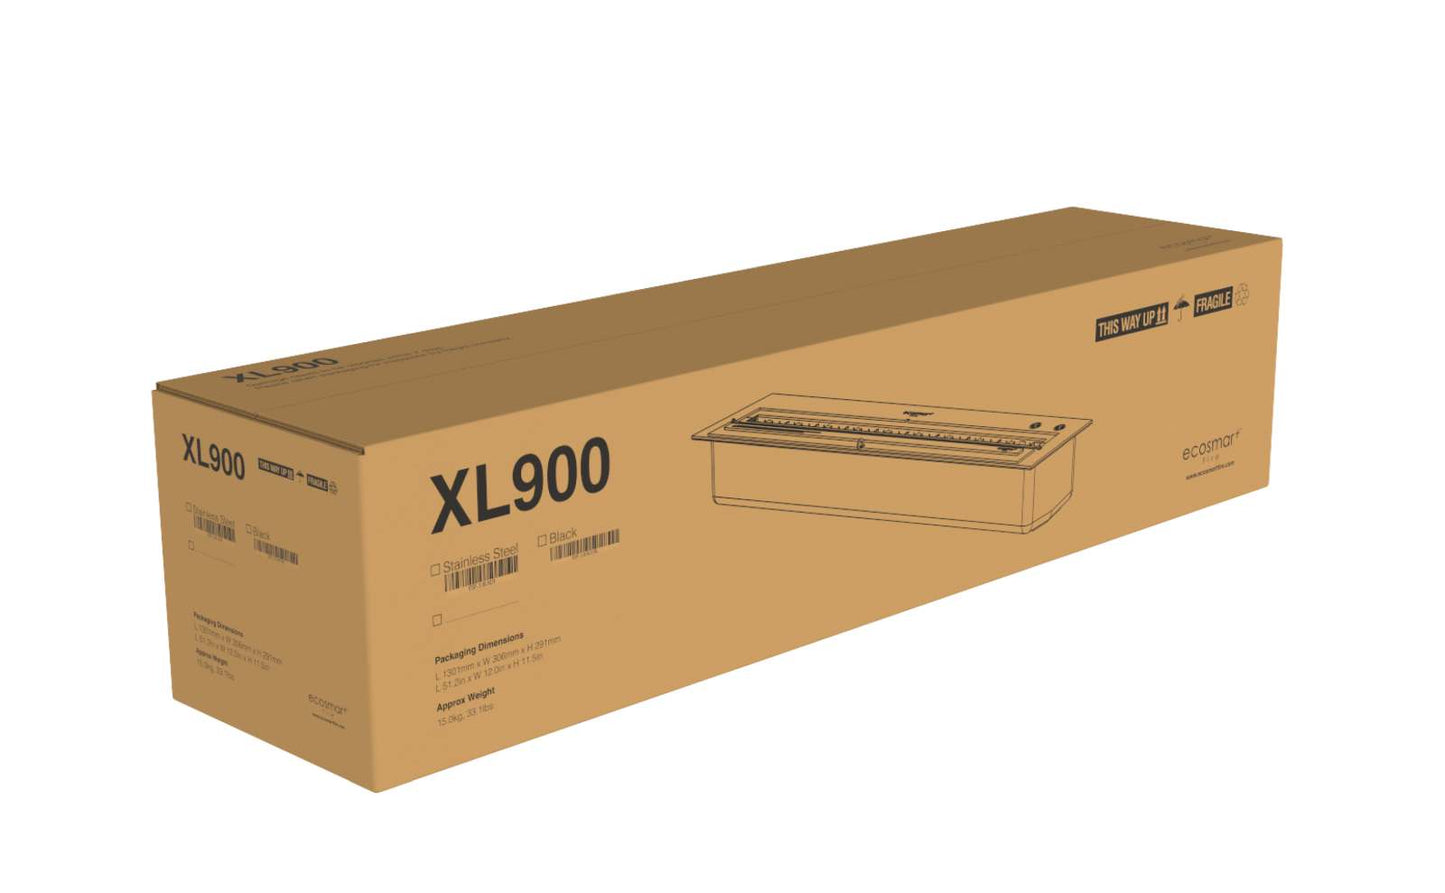 EcoSmart Fire - XL900 - Ethanol Burner - Stainless Steel